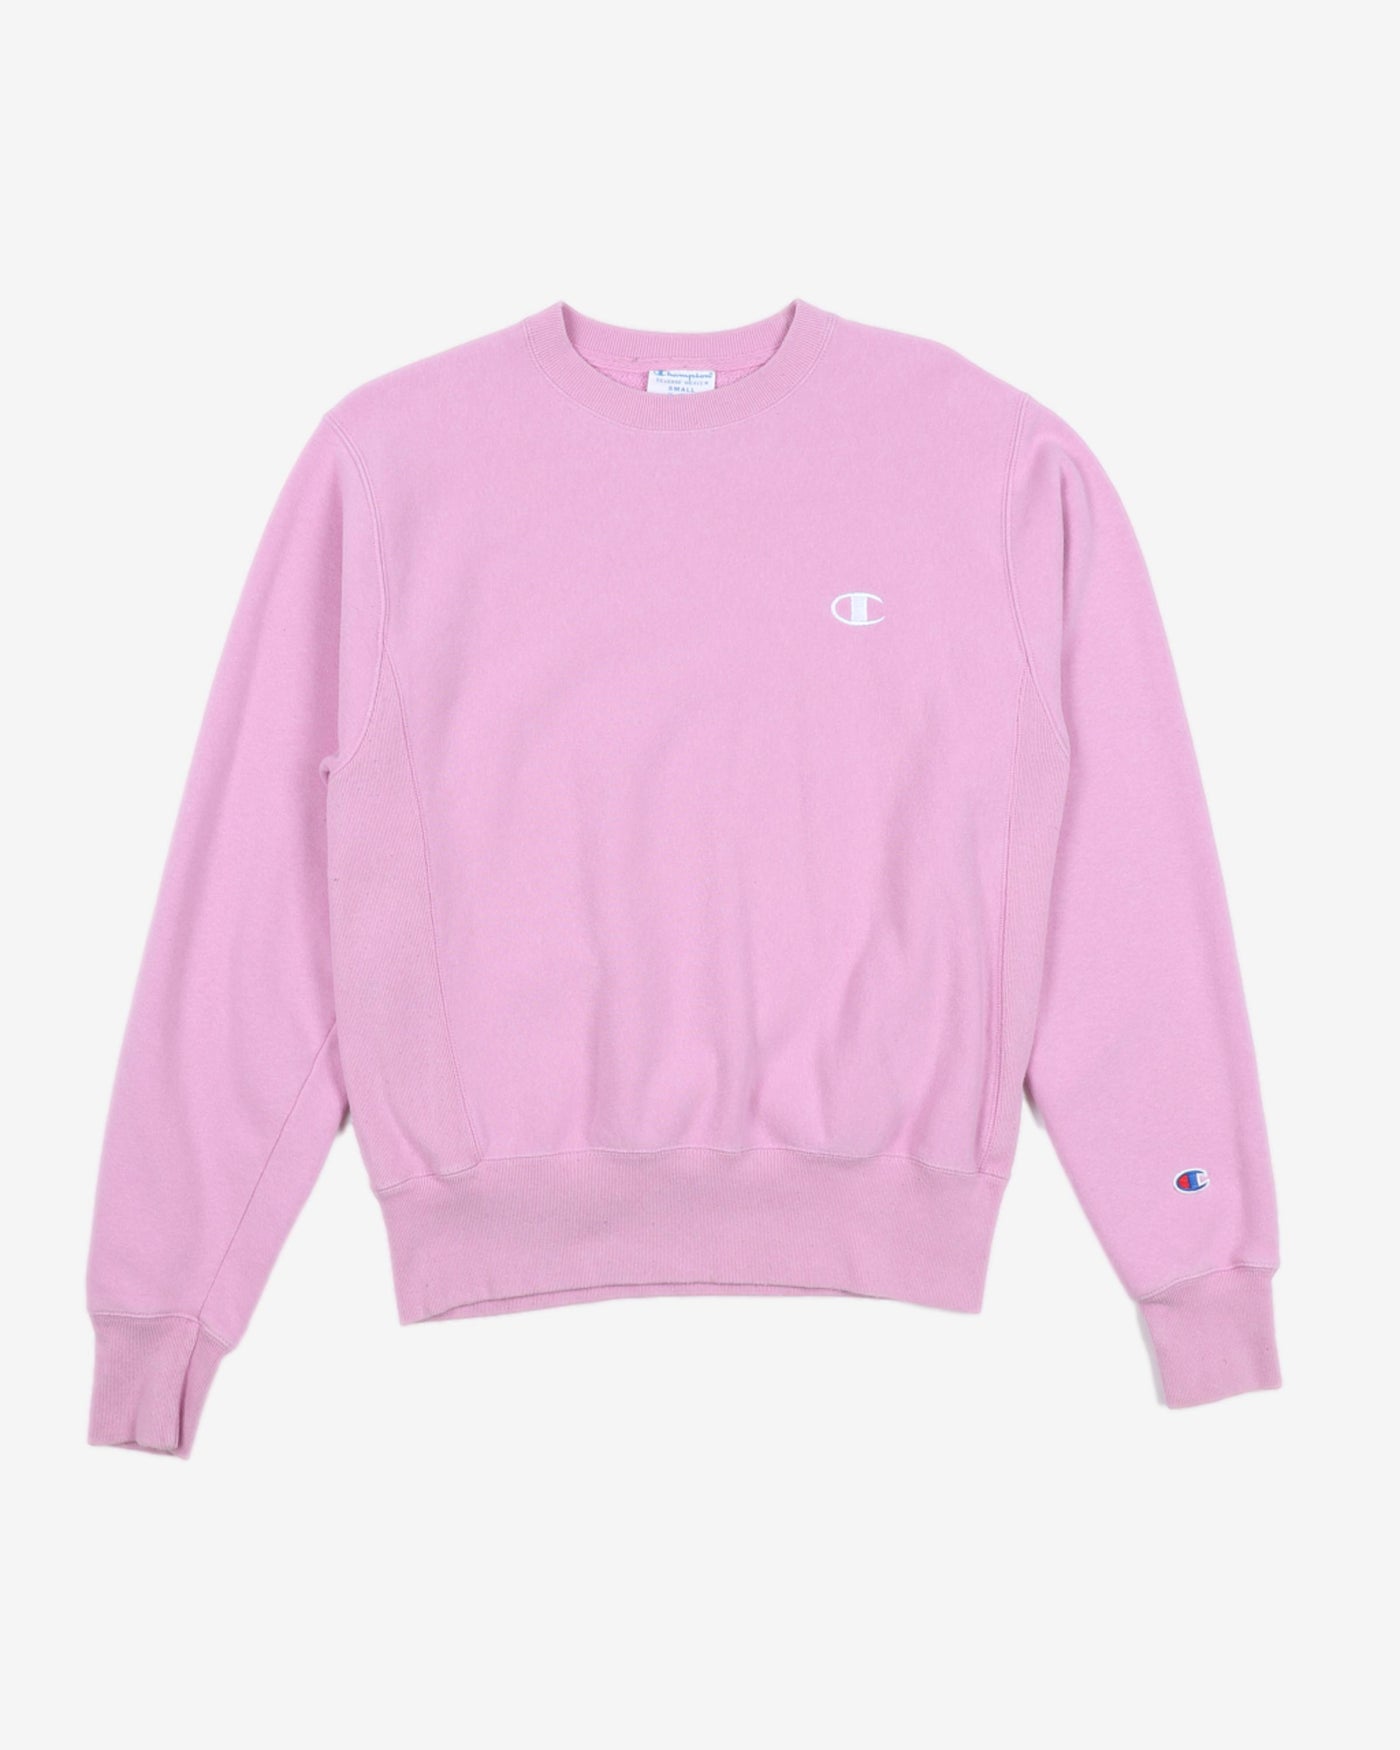 Champion Reverse Weave Embroidered Logo Baby Pink Crewneck / Sweatshirt - S